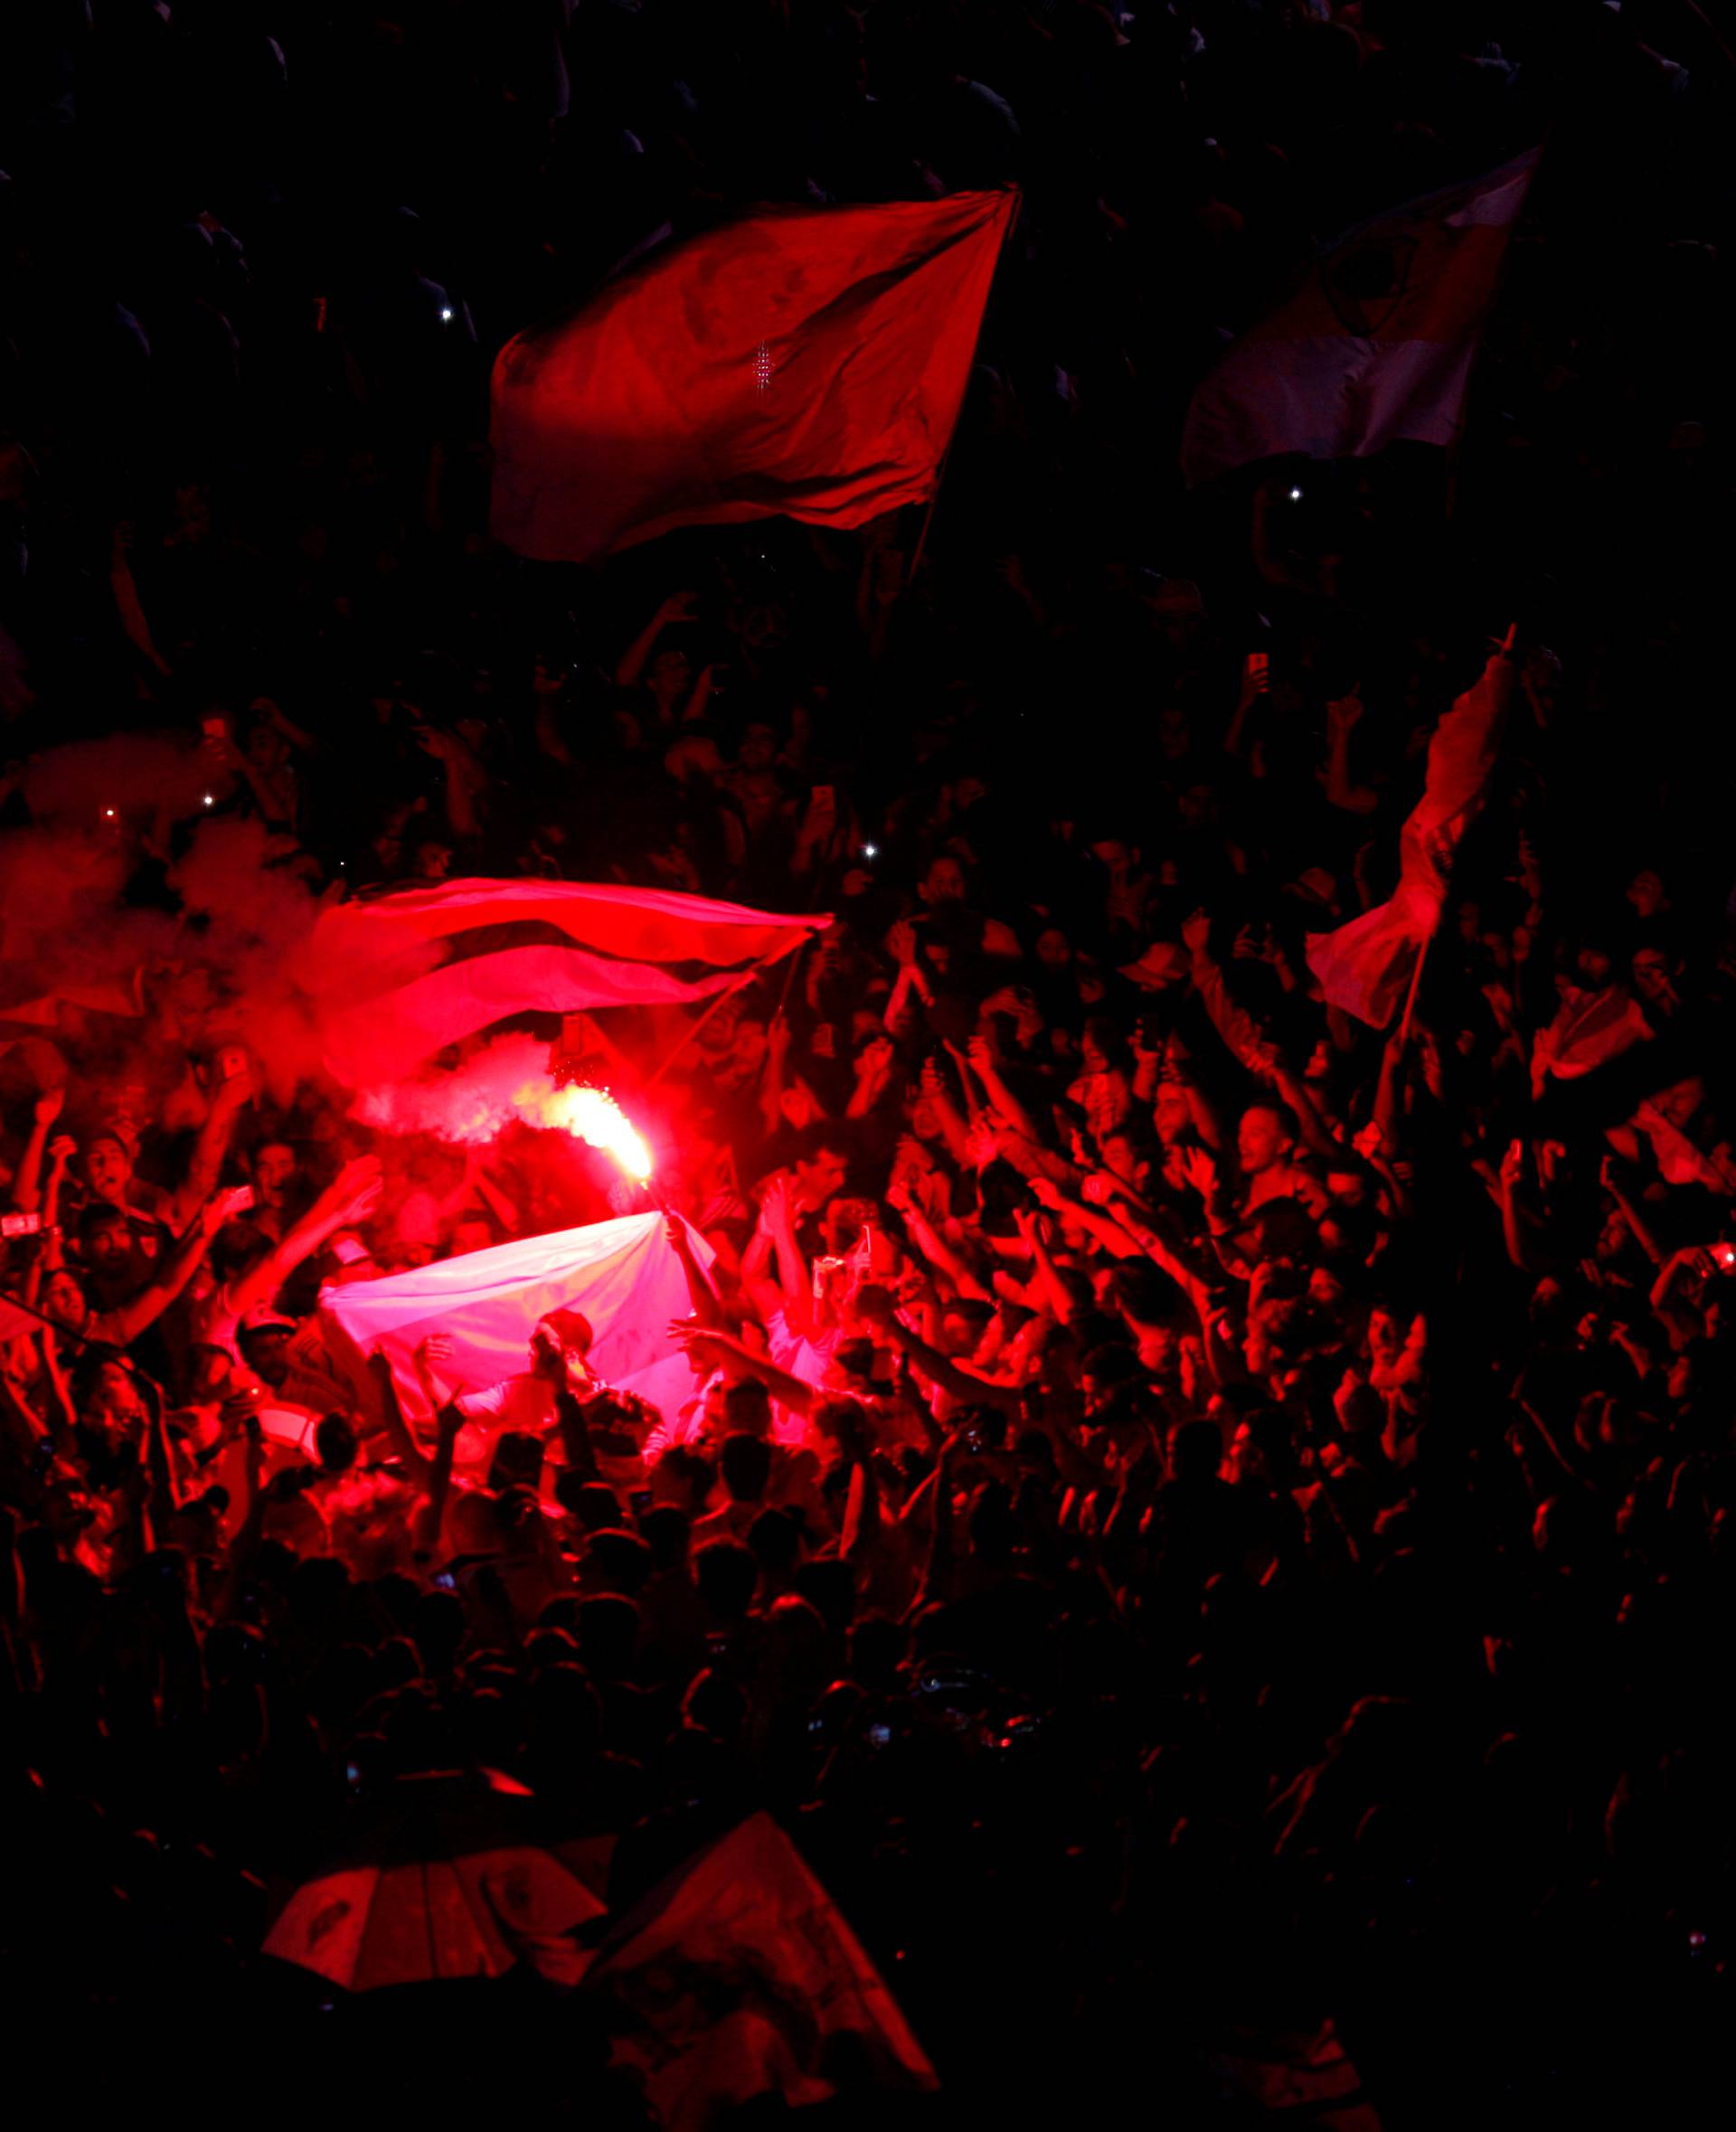 Copa Libertadores Final - River Plate fans celebrate the Copa Libertadores title